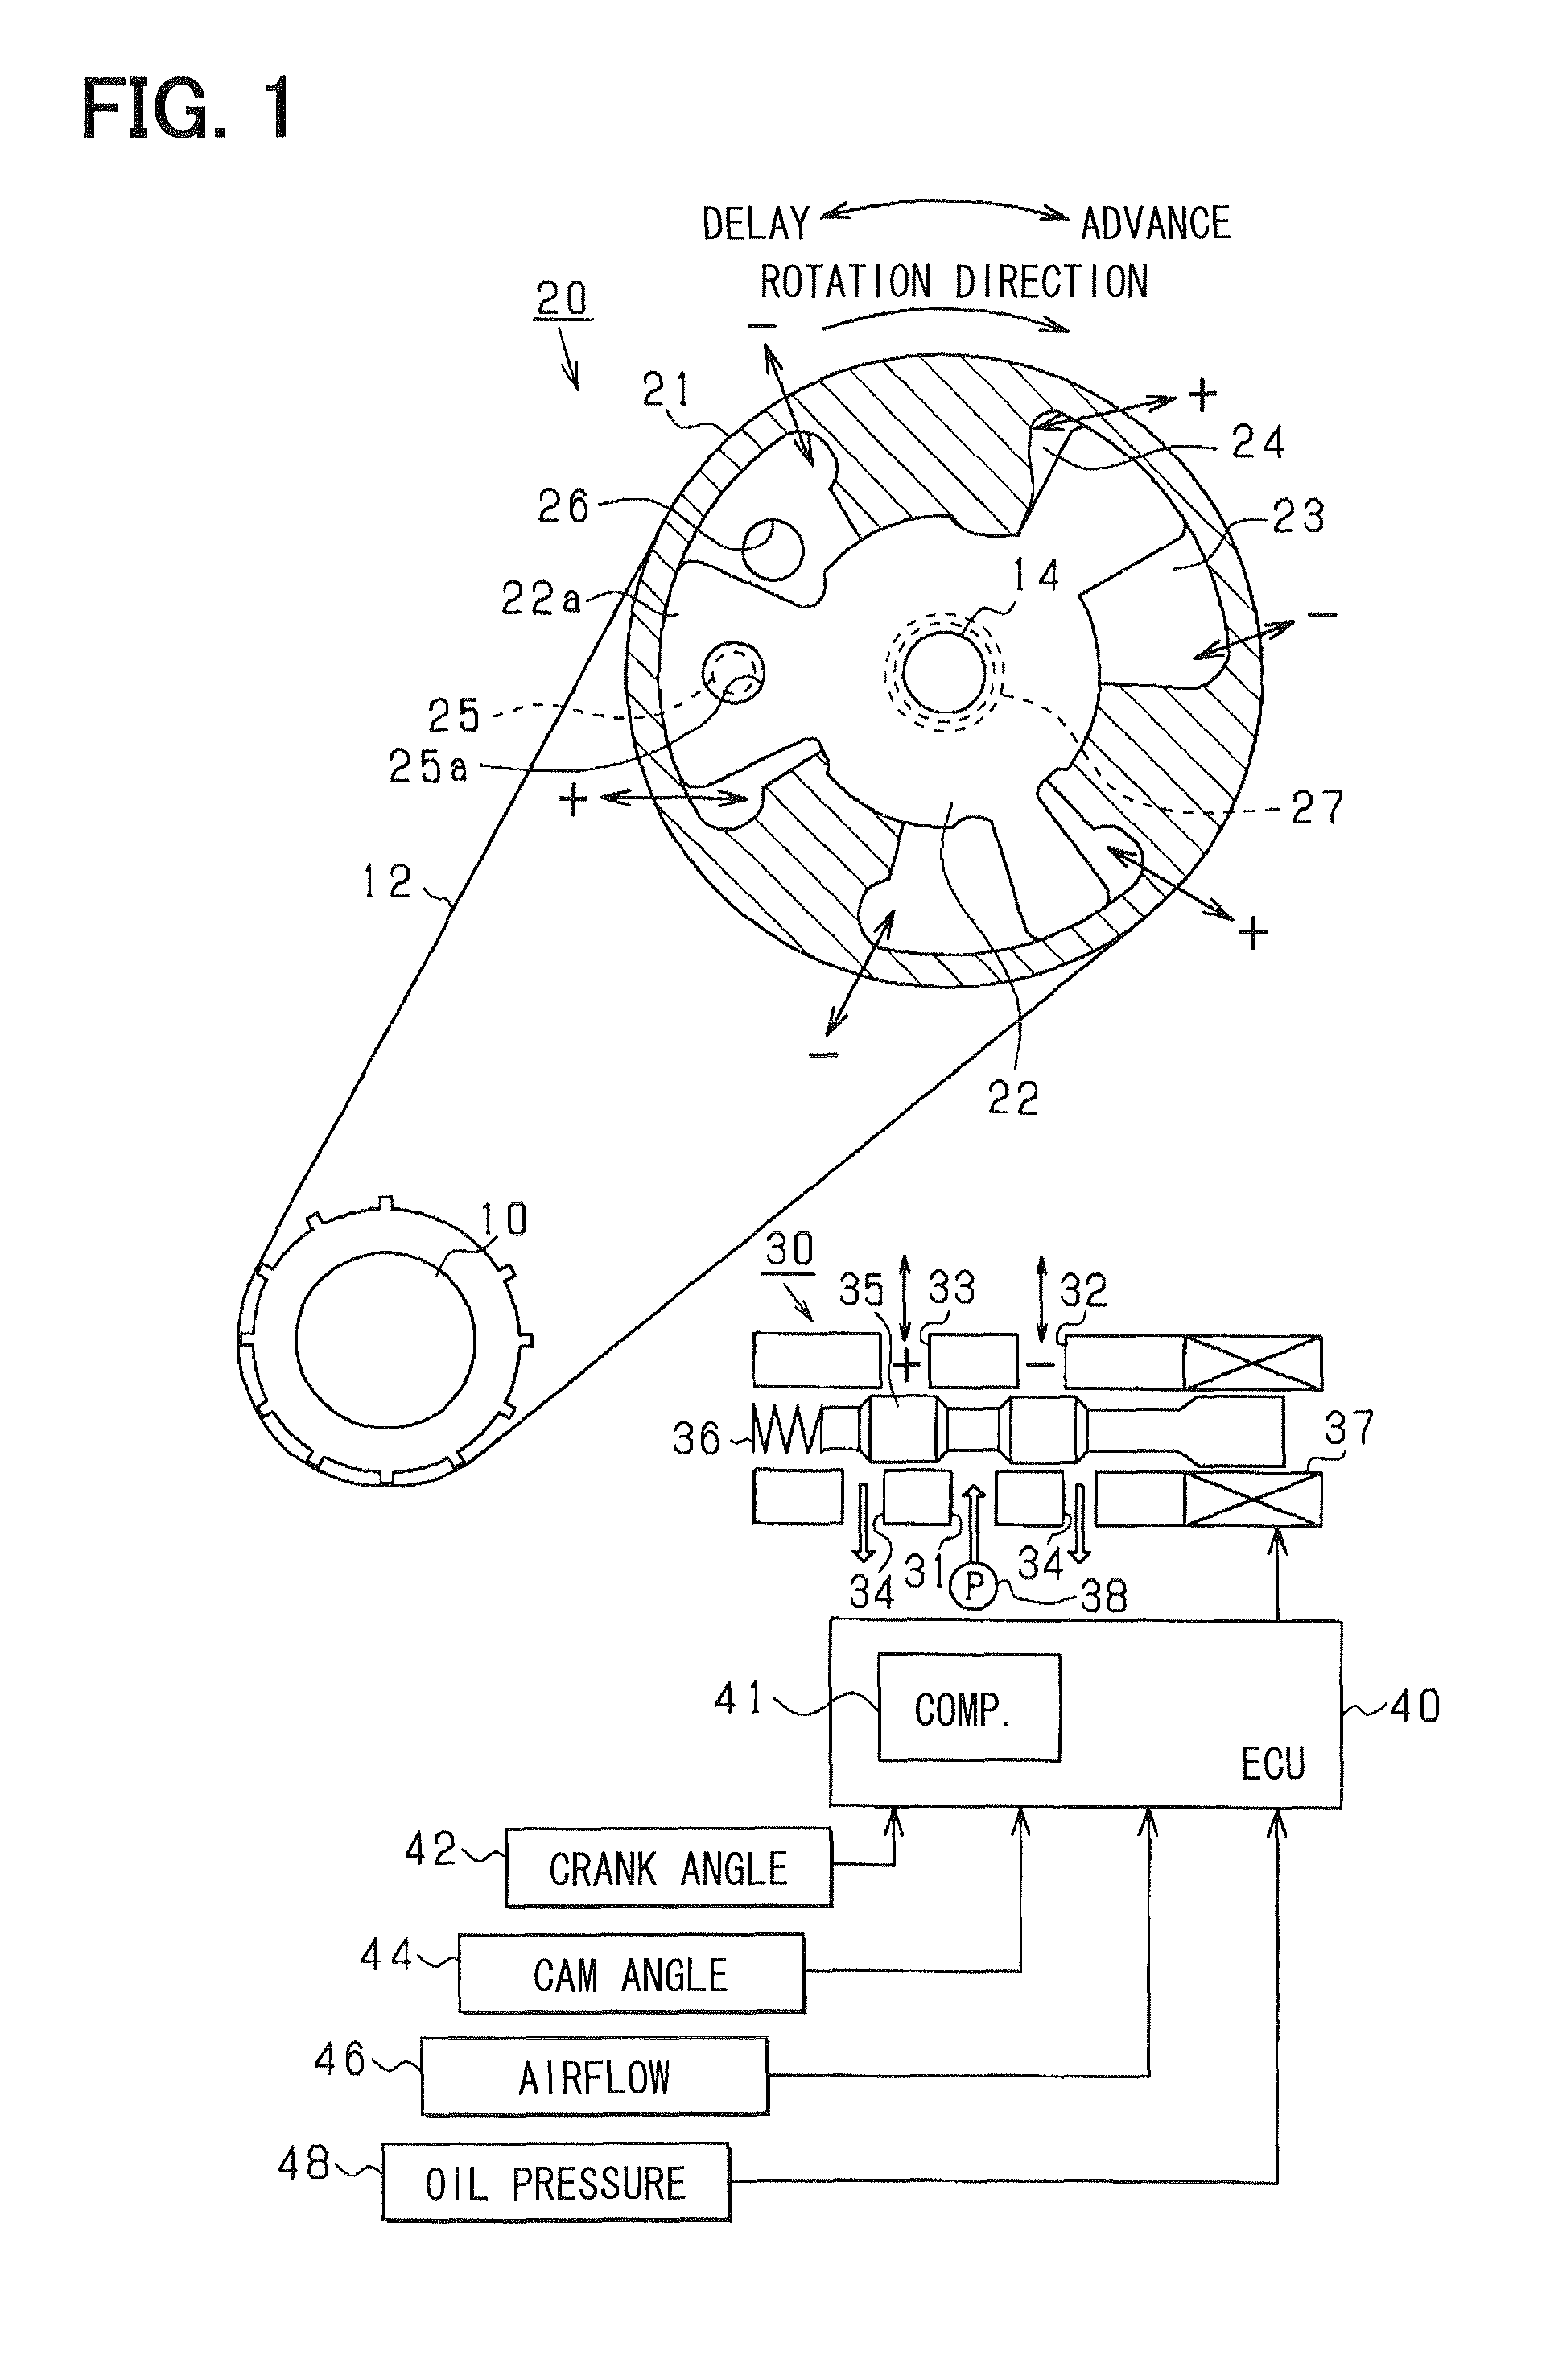 Engine valve control device